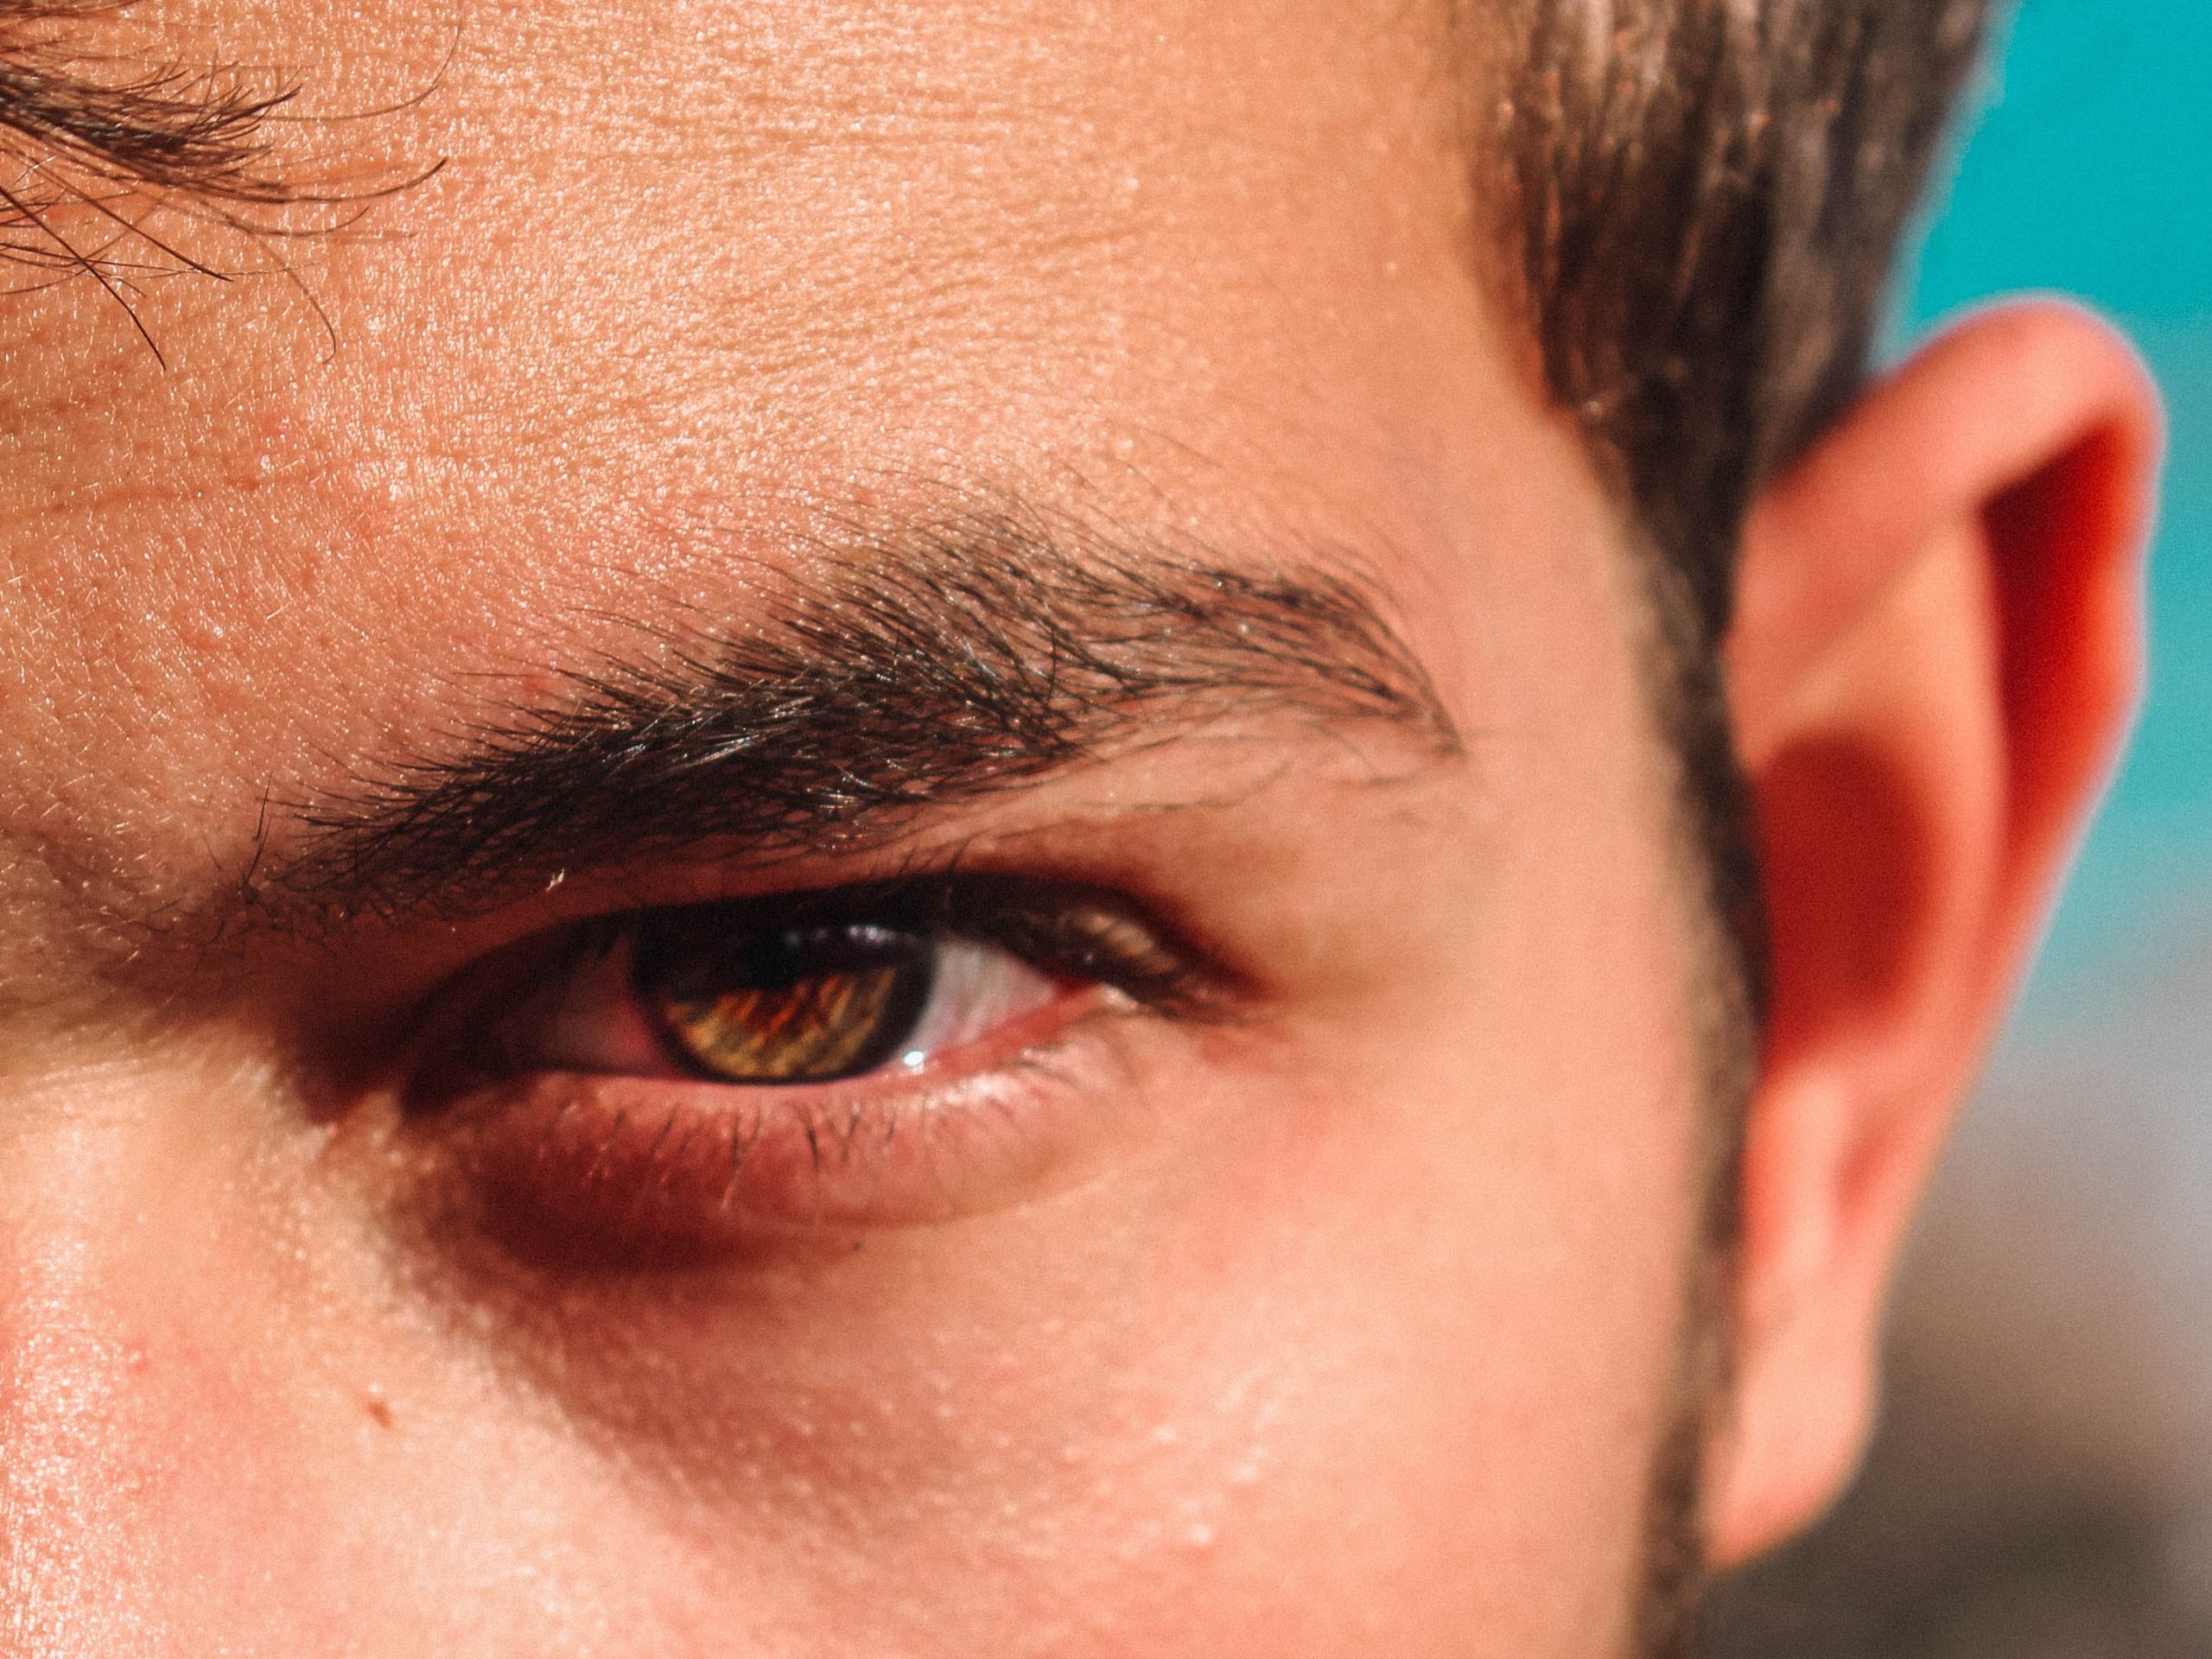 A closeup of a man's eye who's glaring.